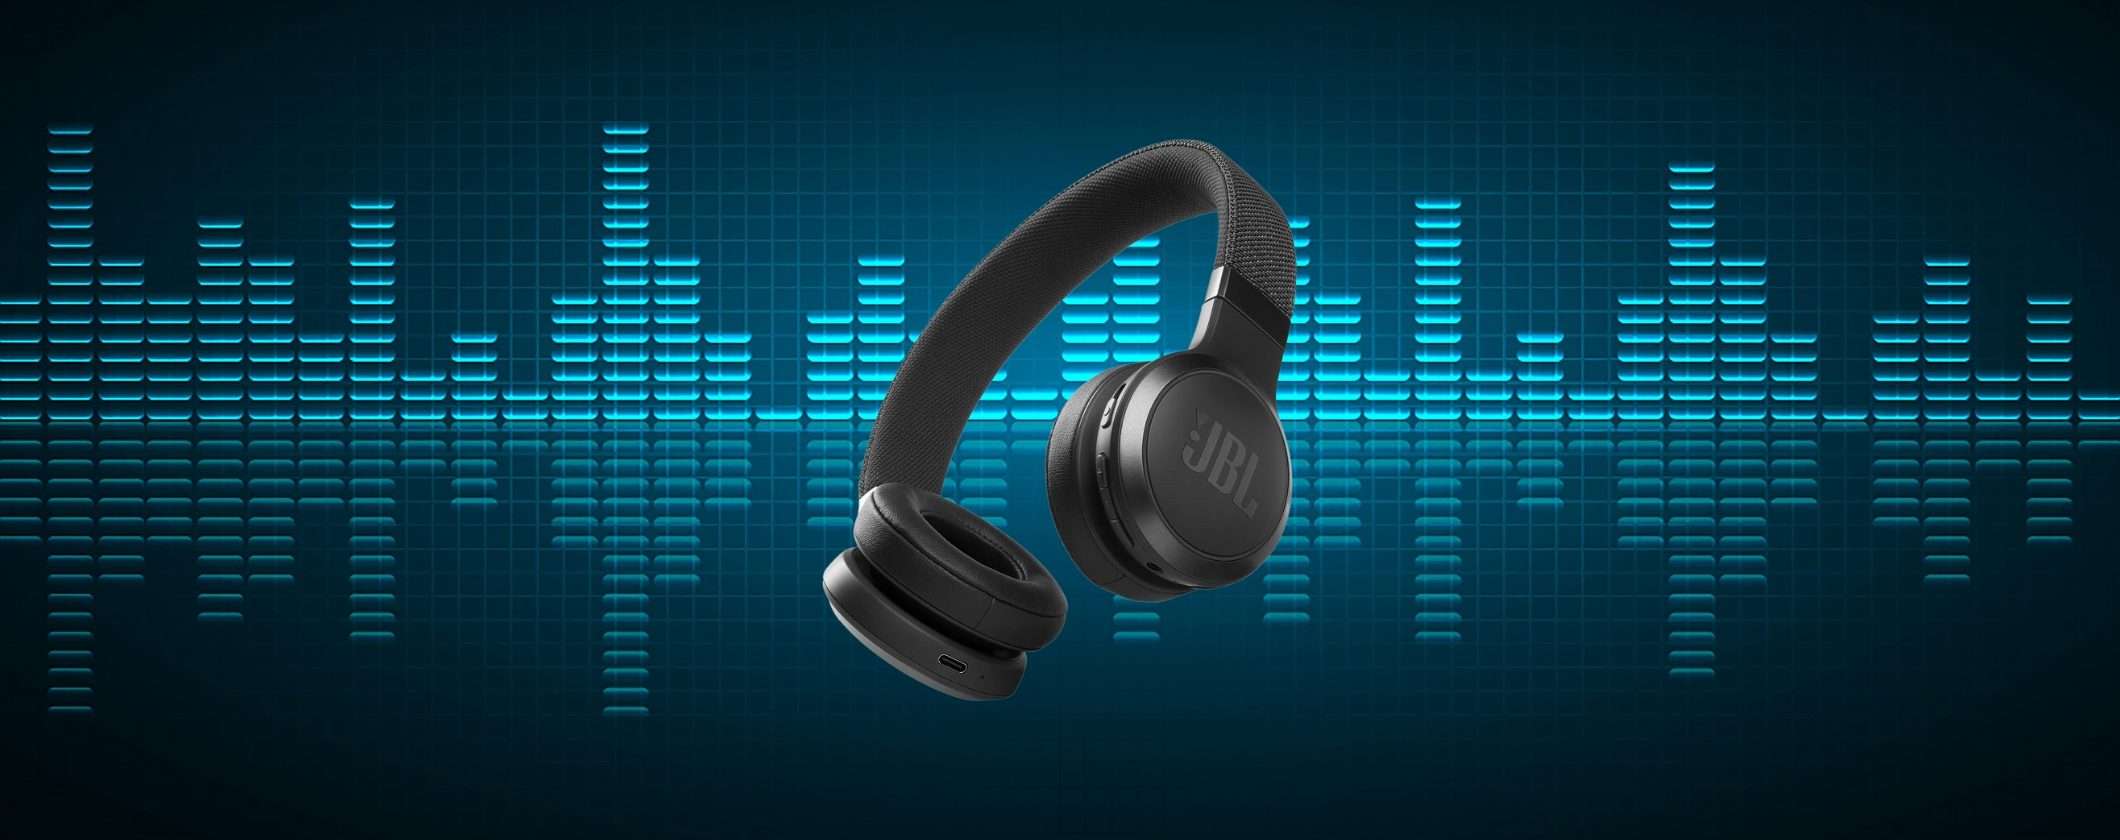 Cuffie JBL Wireless: le top di gamma da 50 ore di ascolto a soli 70€